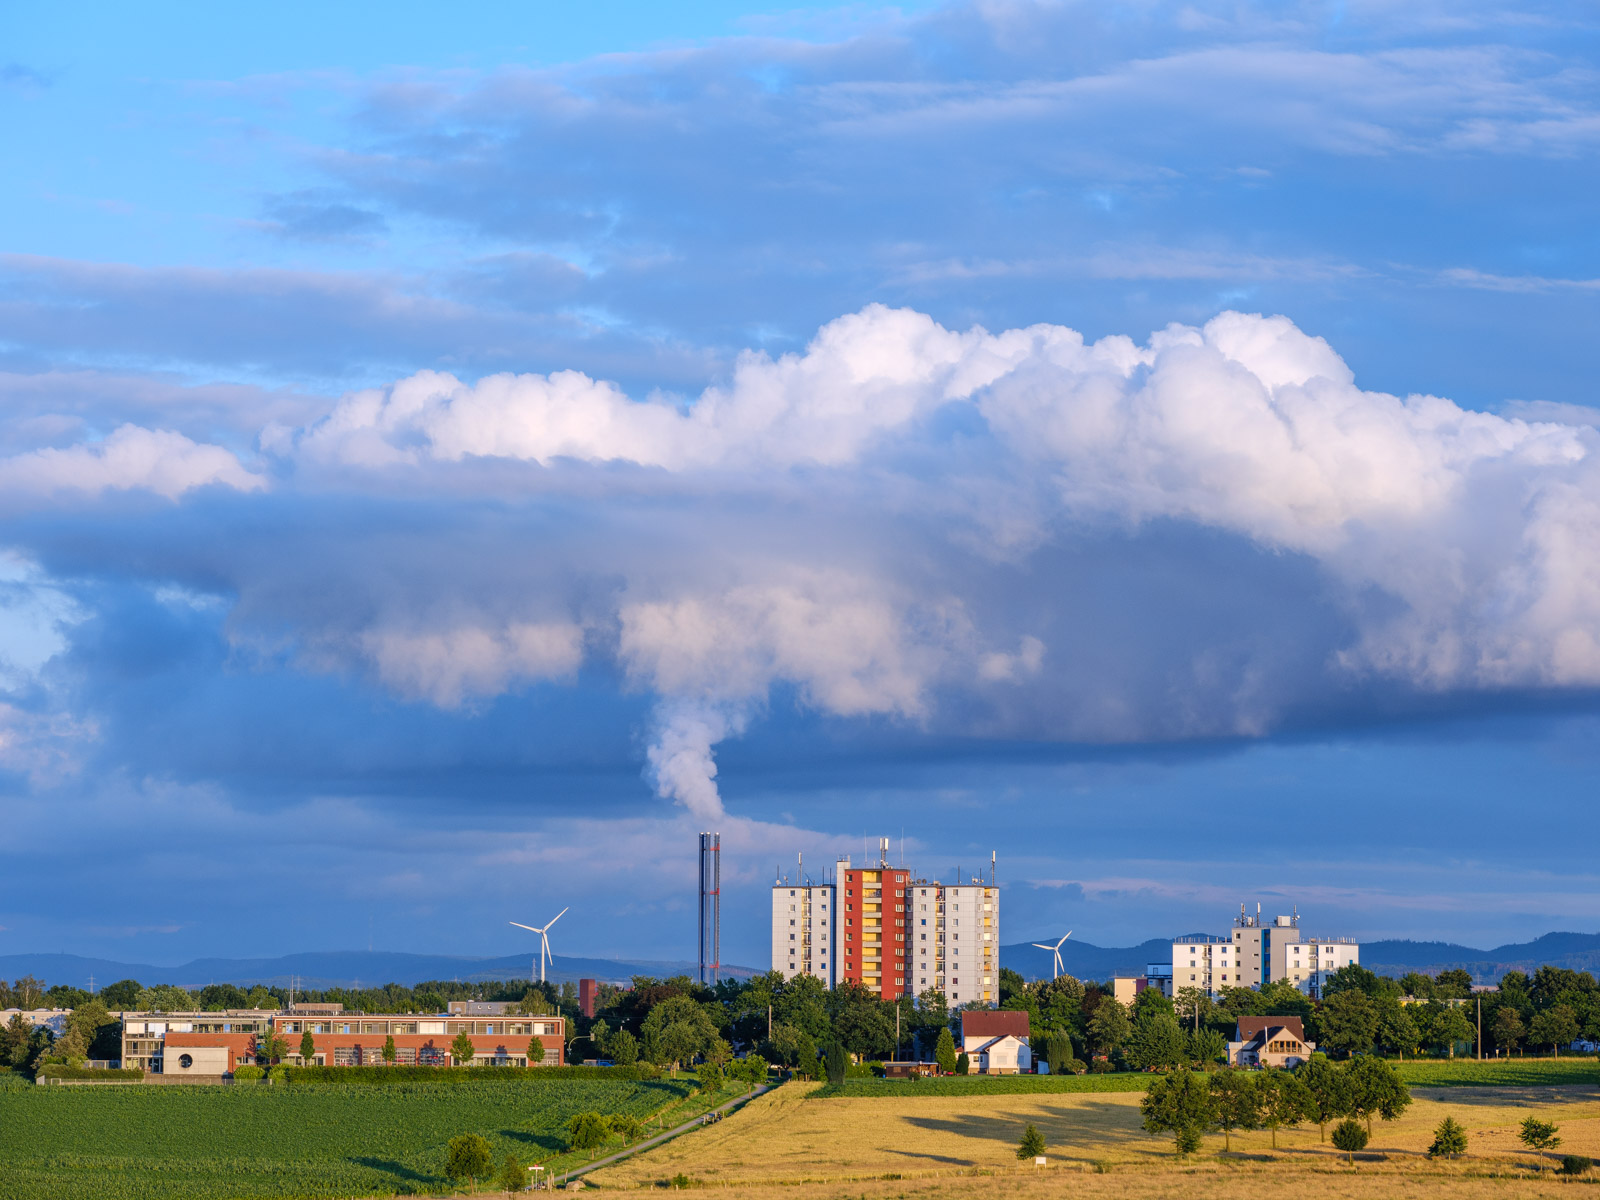 Clouds over 'Baumheide' in July 2020 (Bielefeld, Germany).